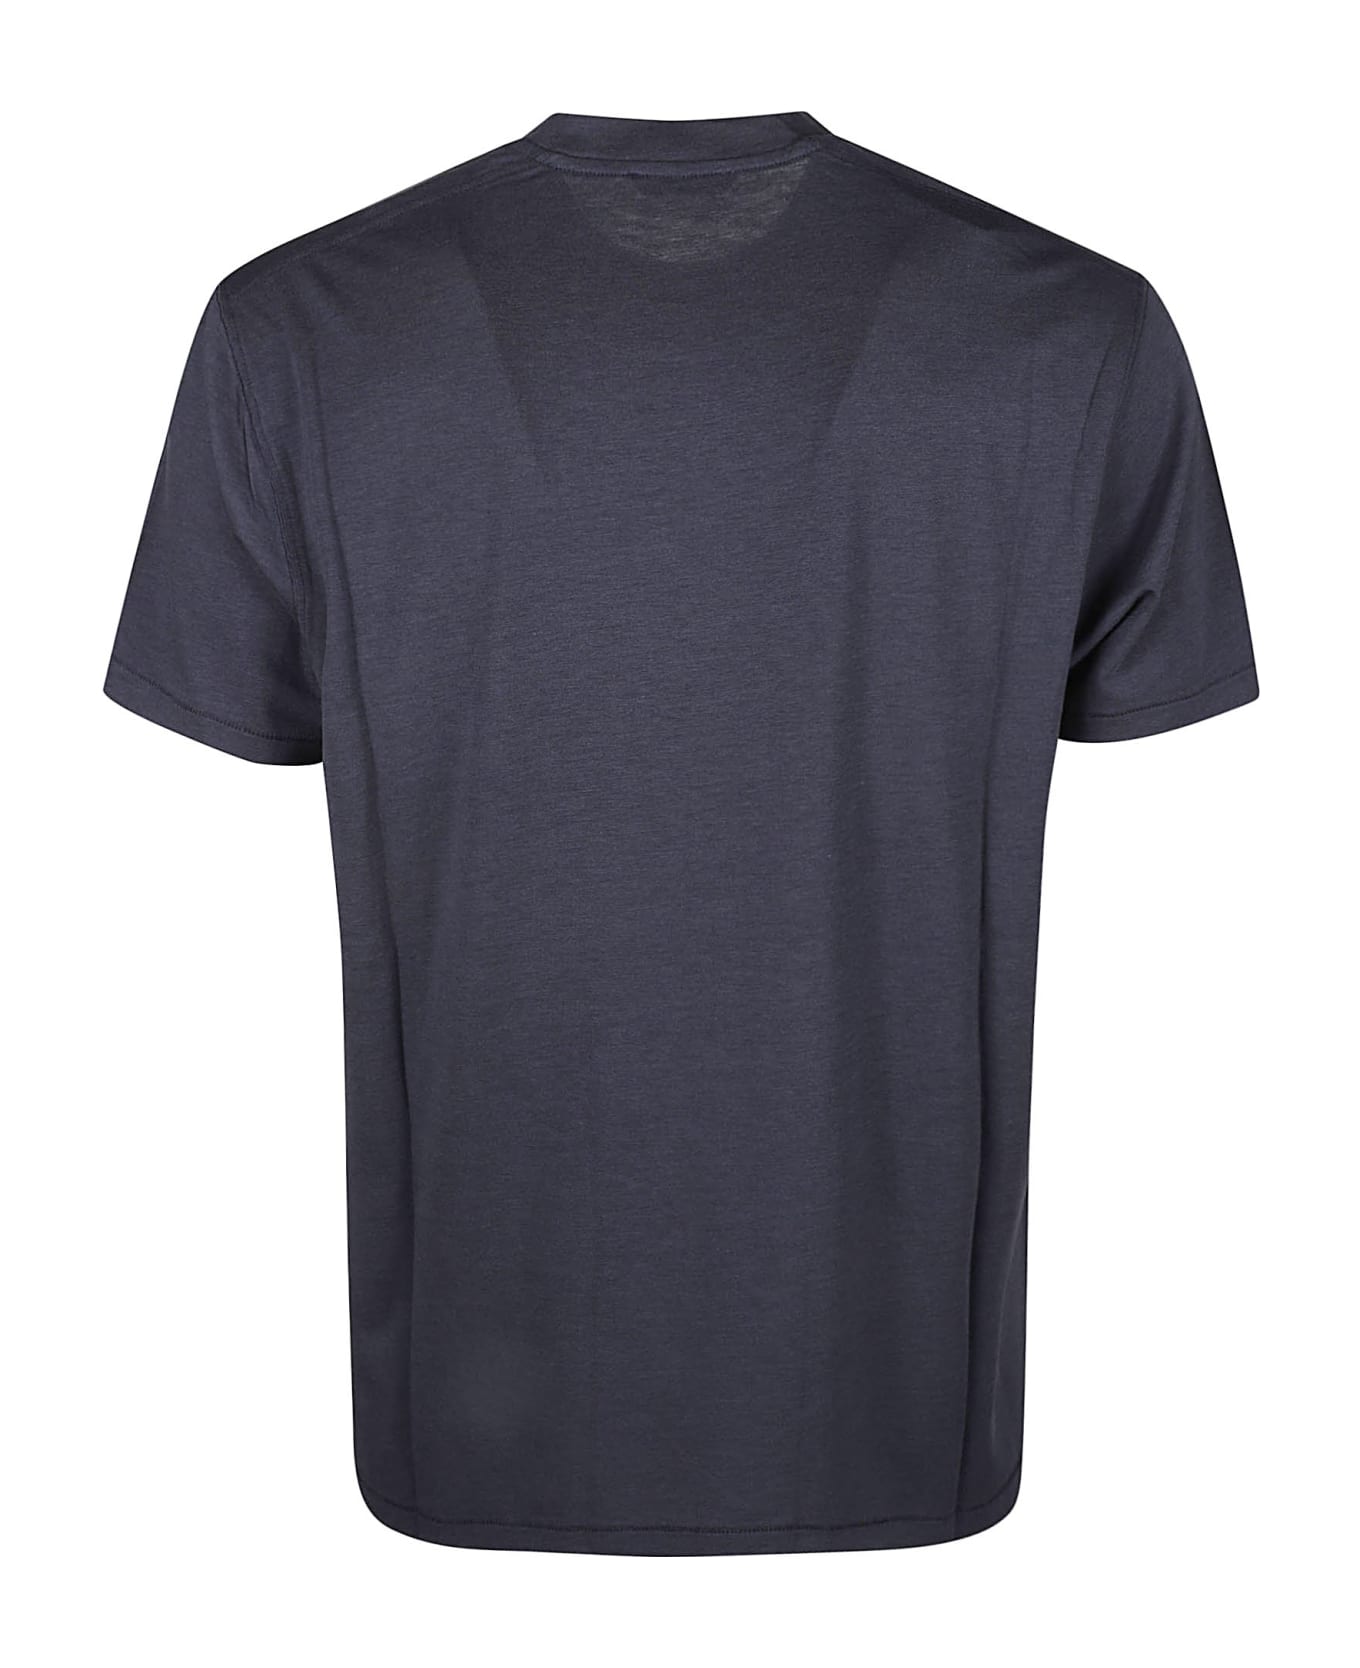 Tom Ford Round Neck Plain T-shirt - Navy